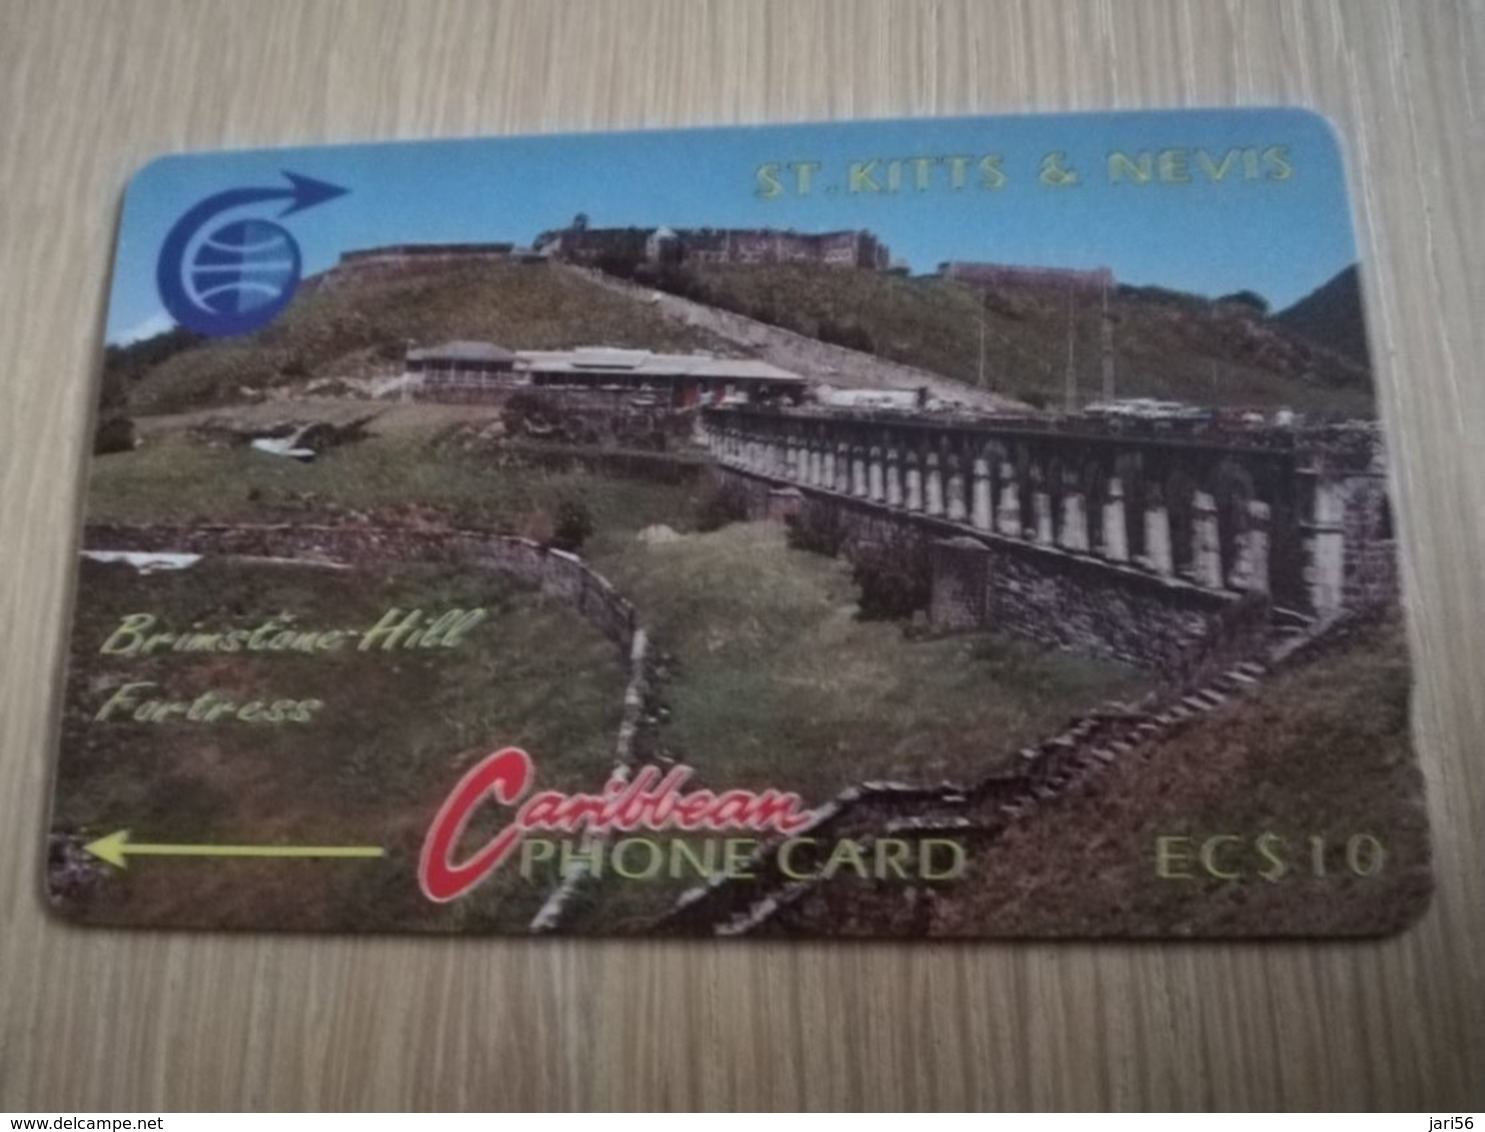 ST KITTS & NEVIS   GPT CARD $10,-   3CSKA     NO STK-3A    BRIMSTONE HILL    Fine Used Card  **2327** - St. Kitts En Nevis